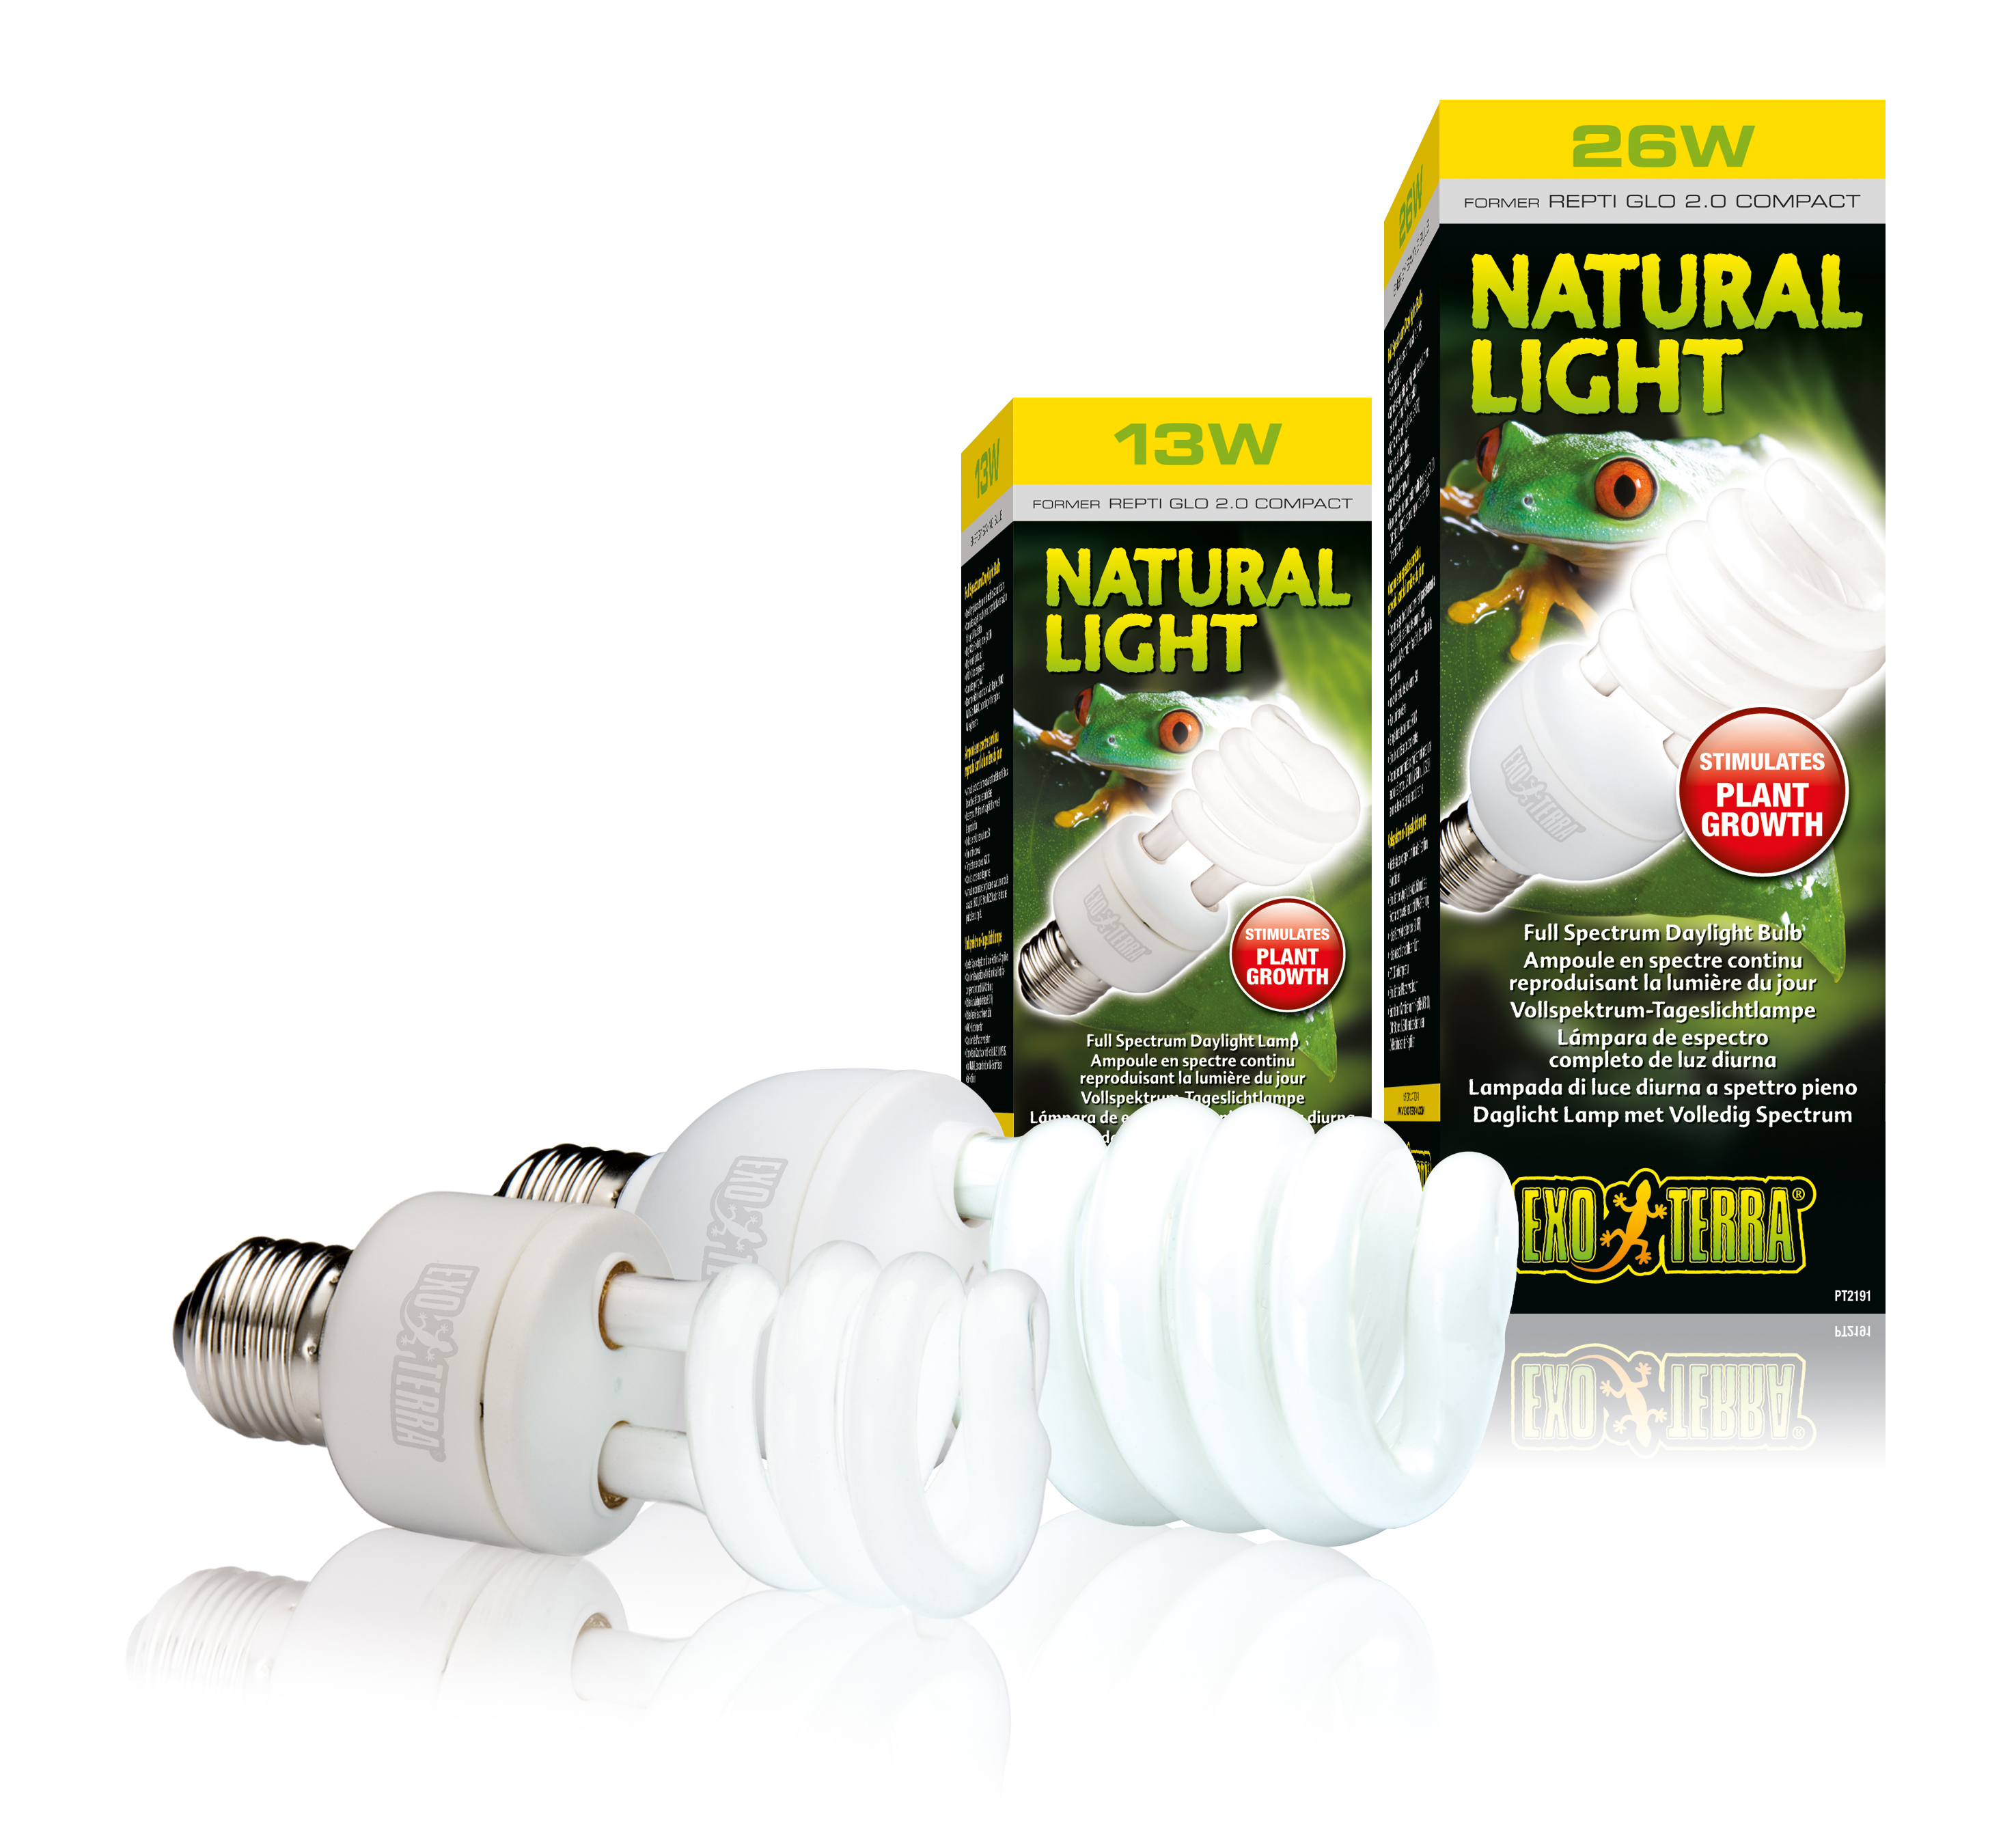 Ex natural light vollspektrumlampe - <Product shot>